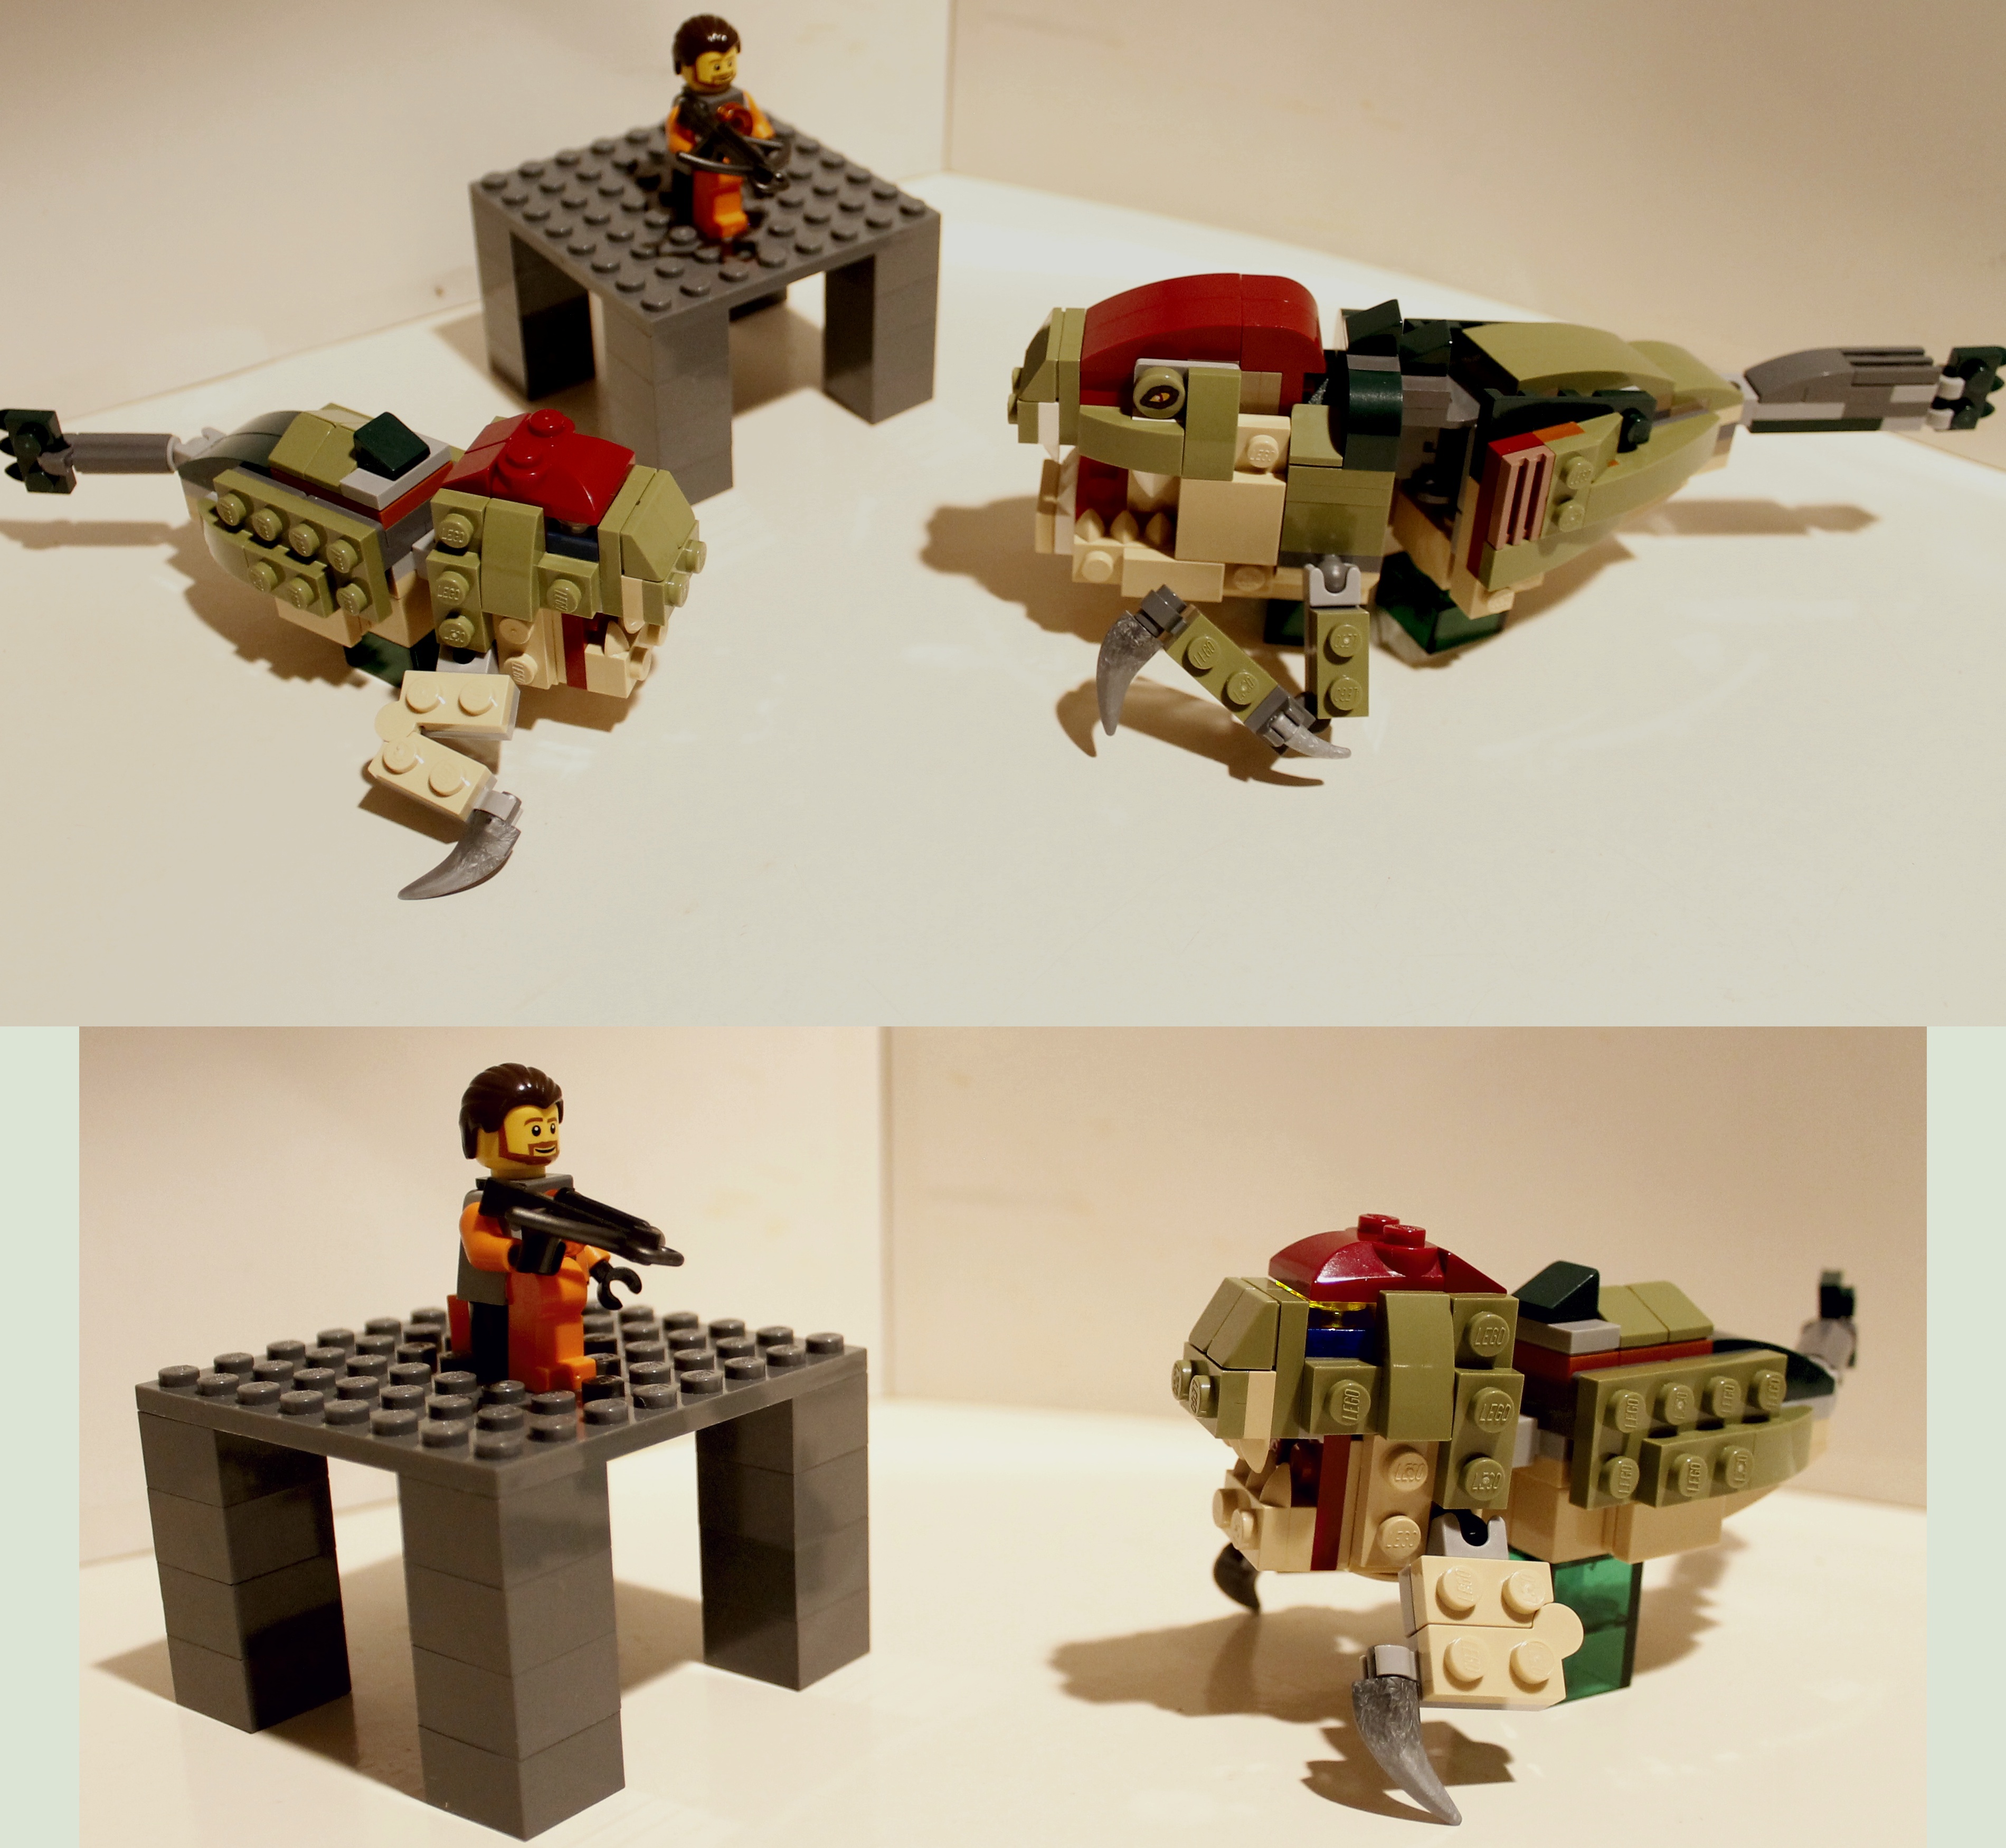 LEGO Half-Life - A Tale of Two Ichthys